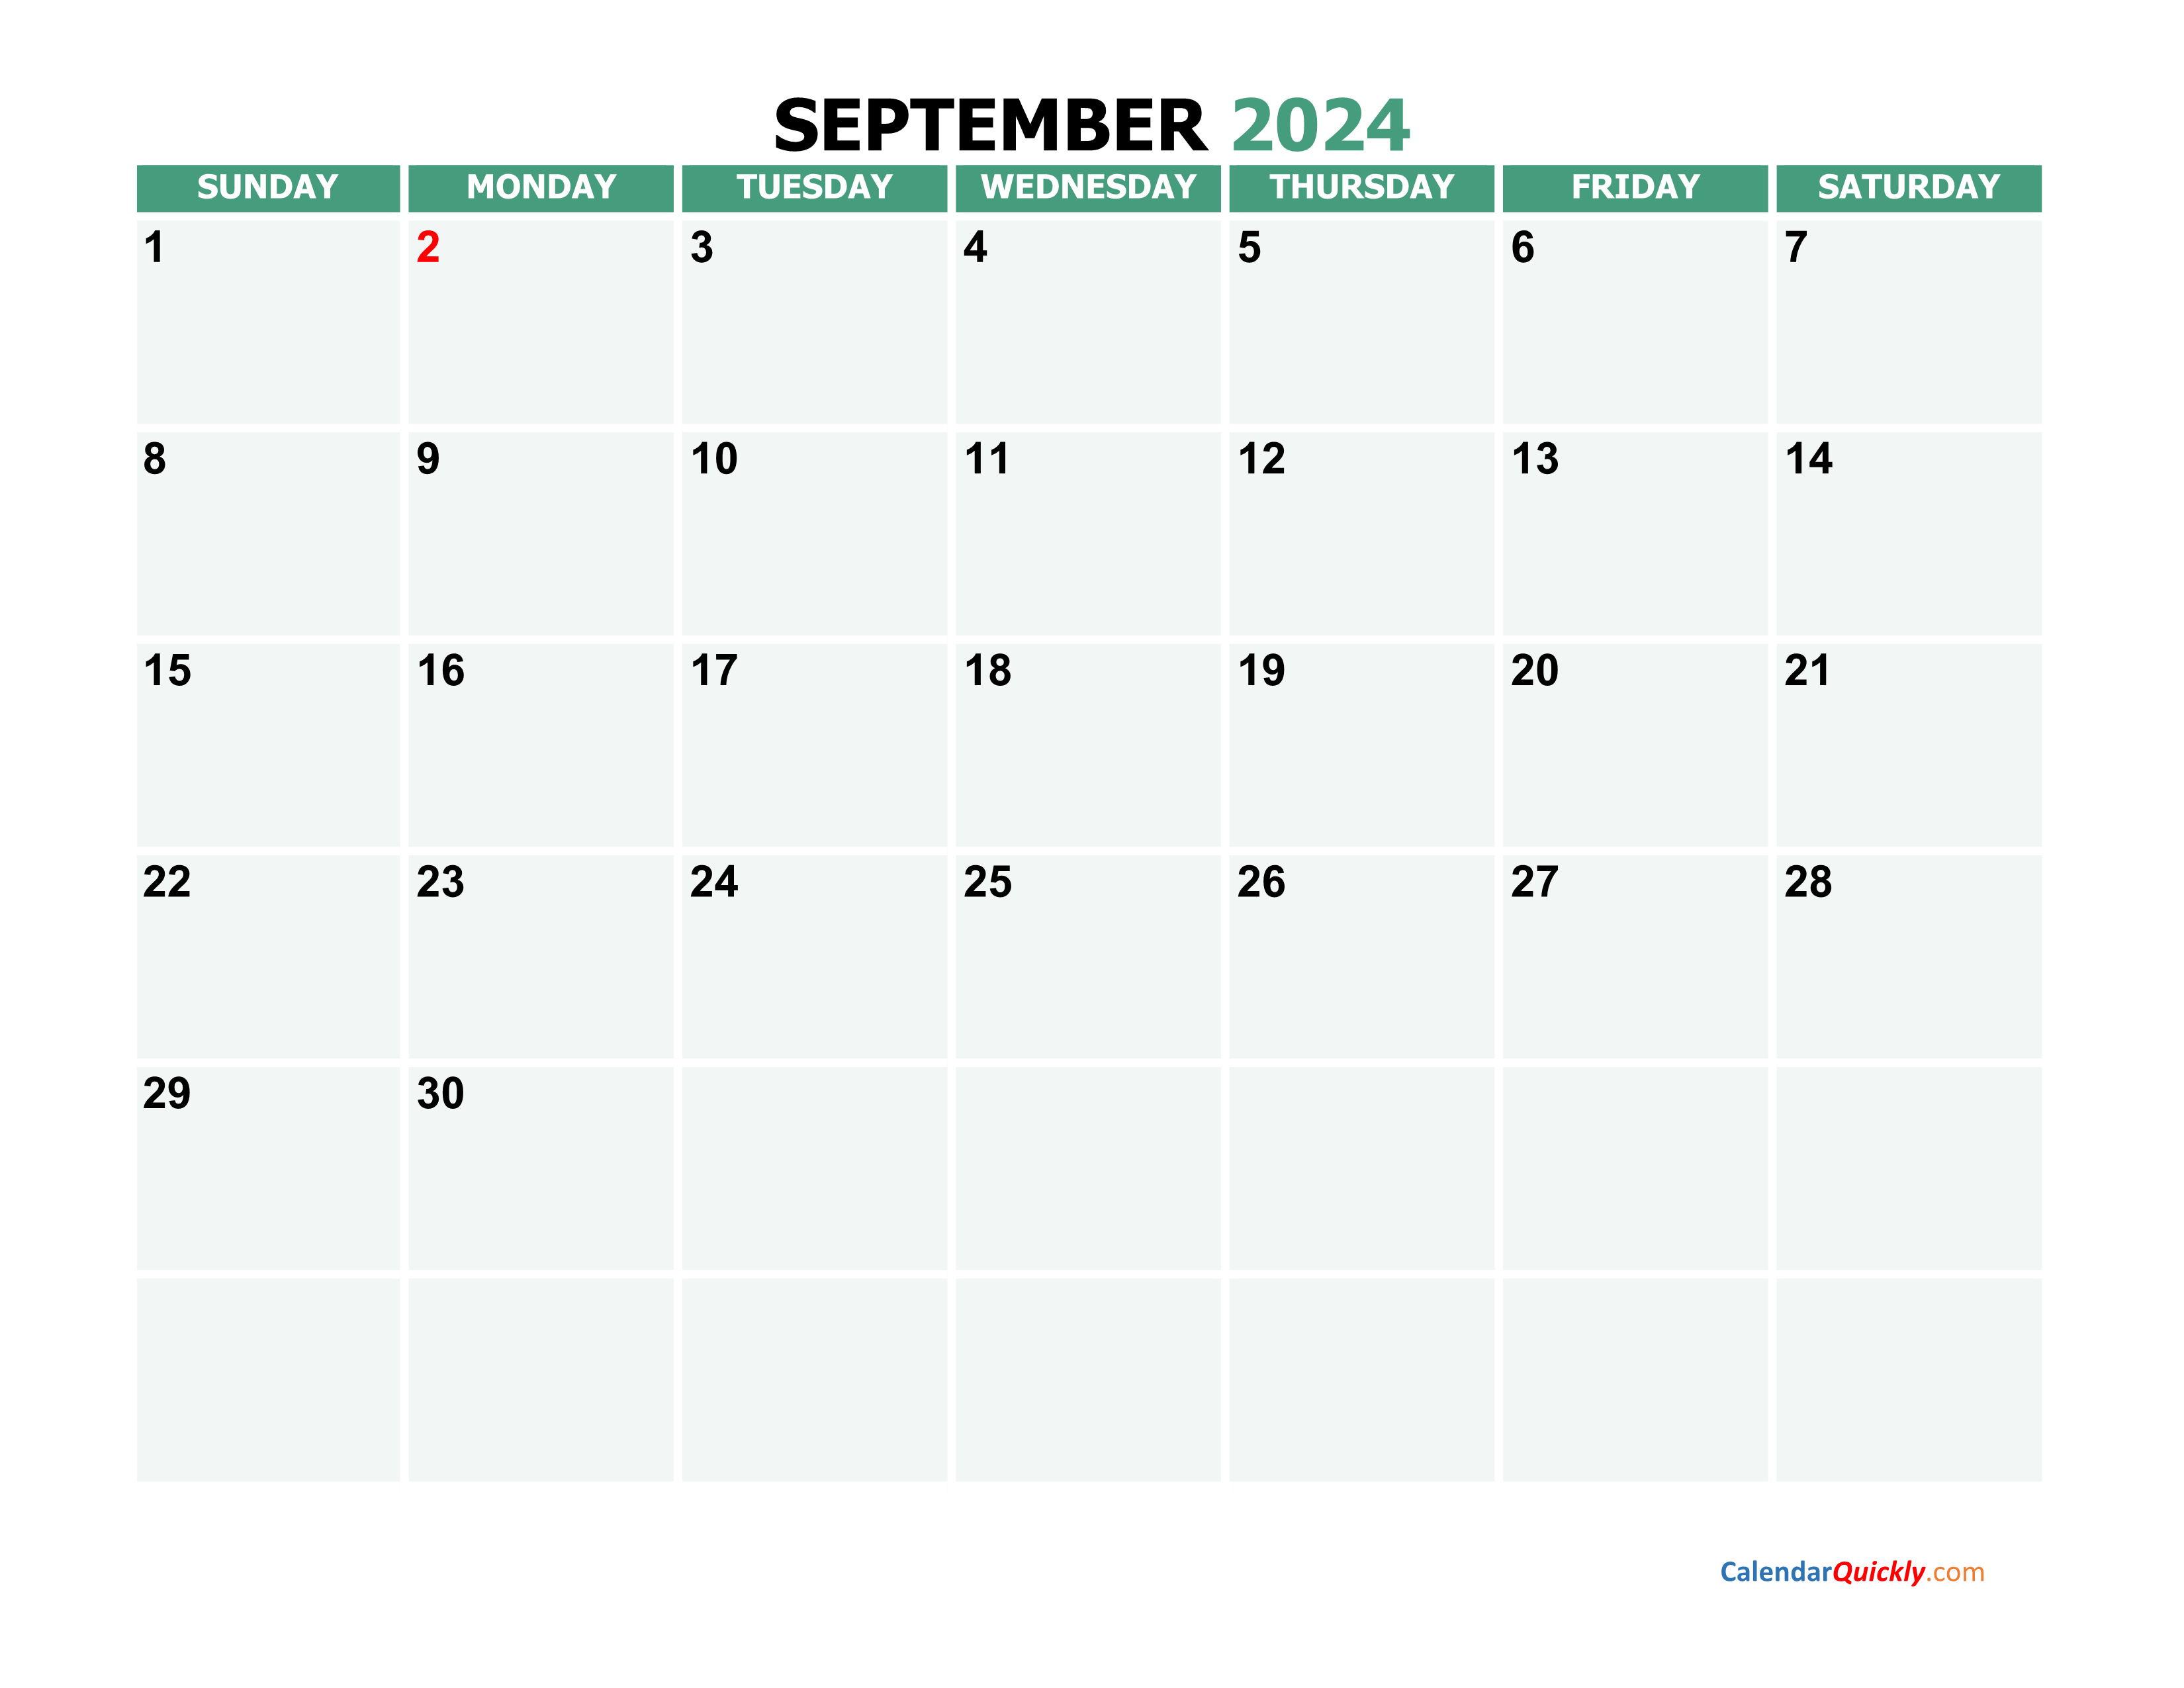 Calendar September 2024 Printable Free Calendar 2024 All Holidays - Free Printable 2024 September-December Calendar With Holidays